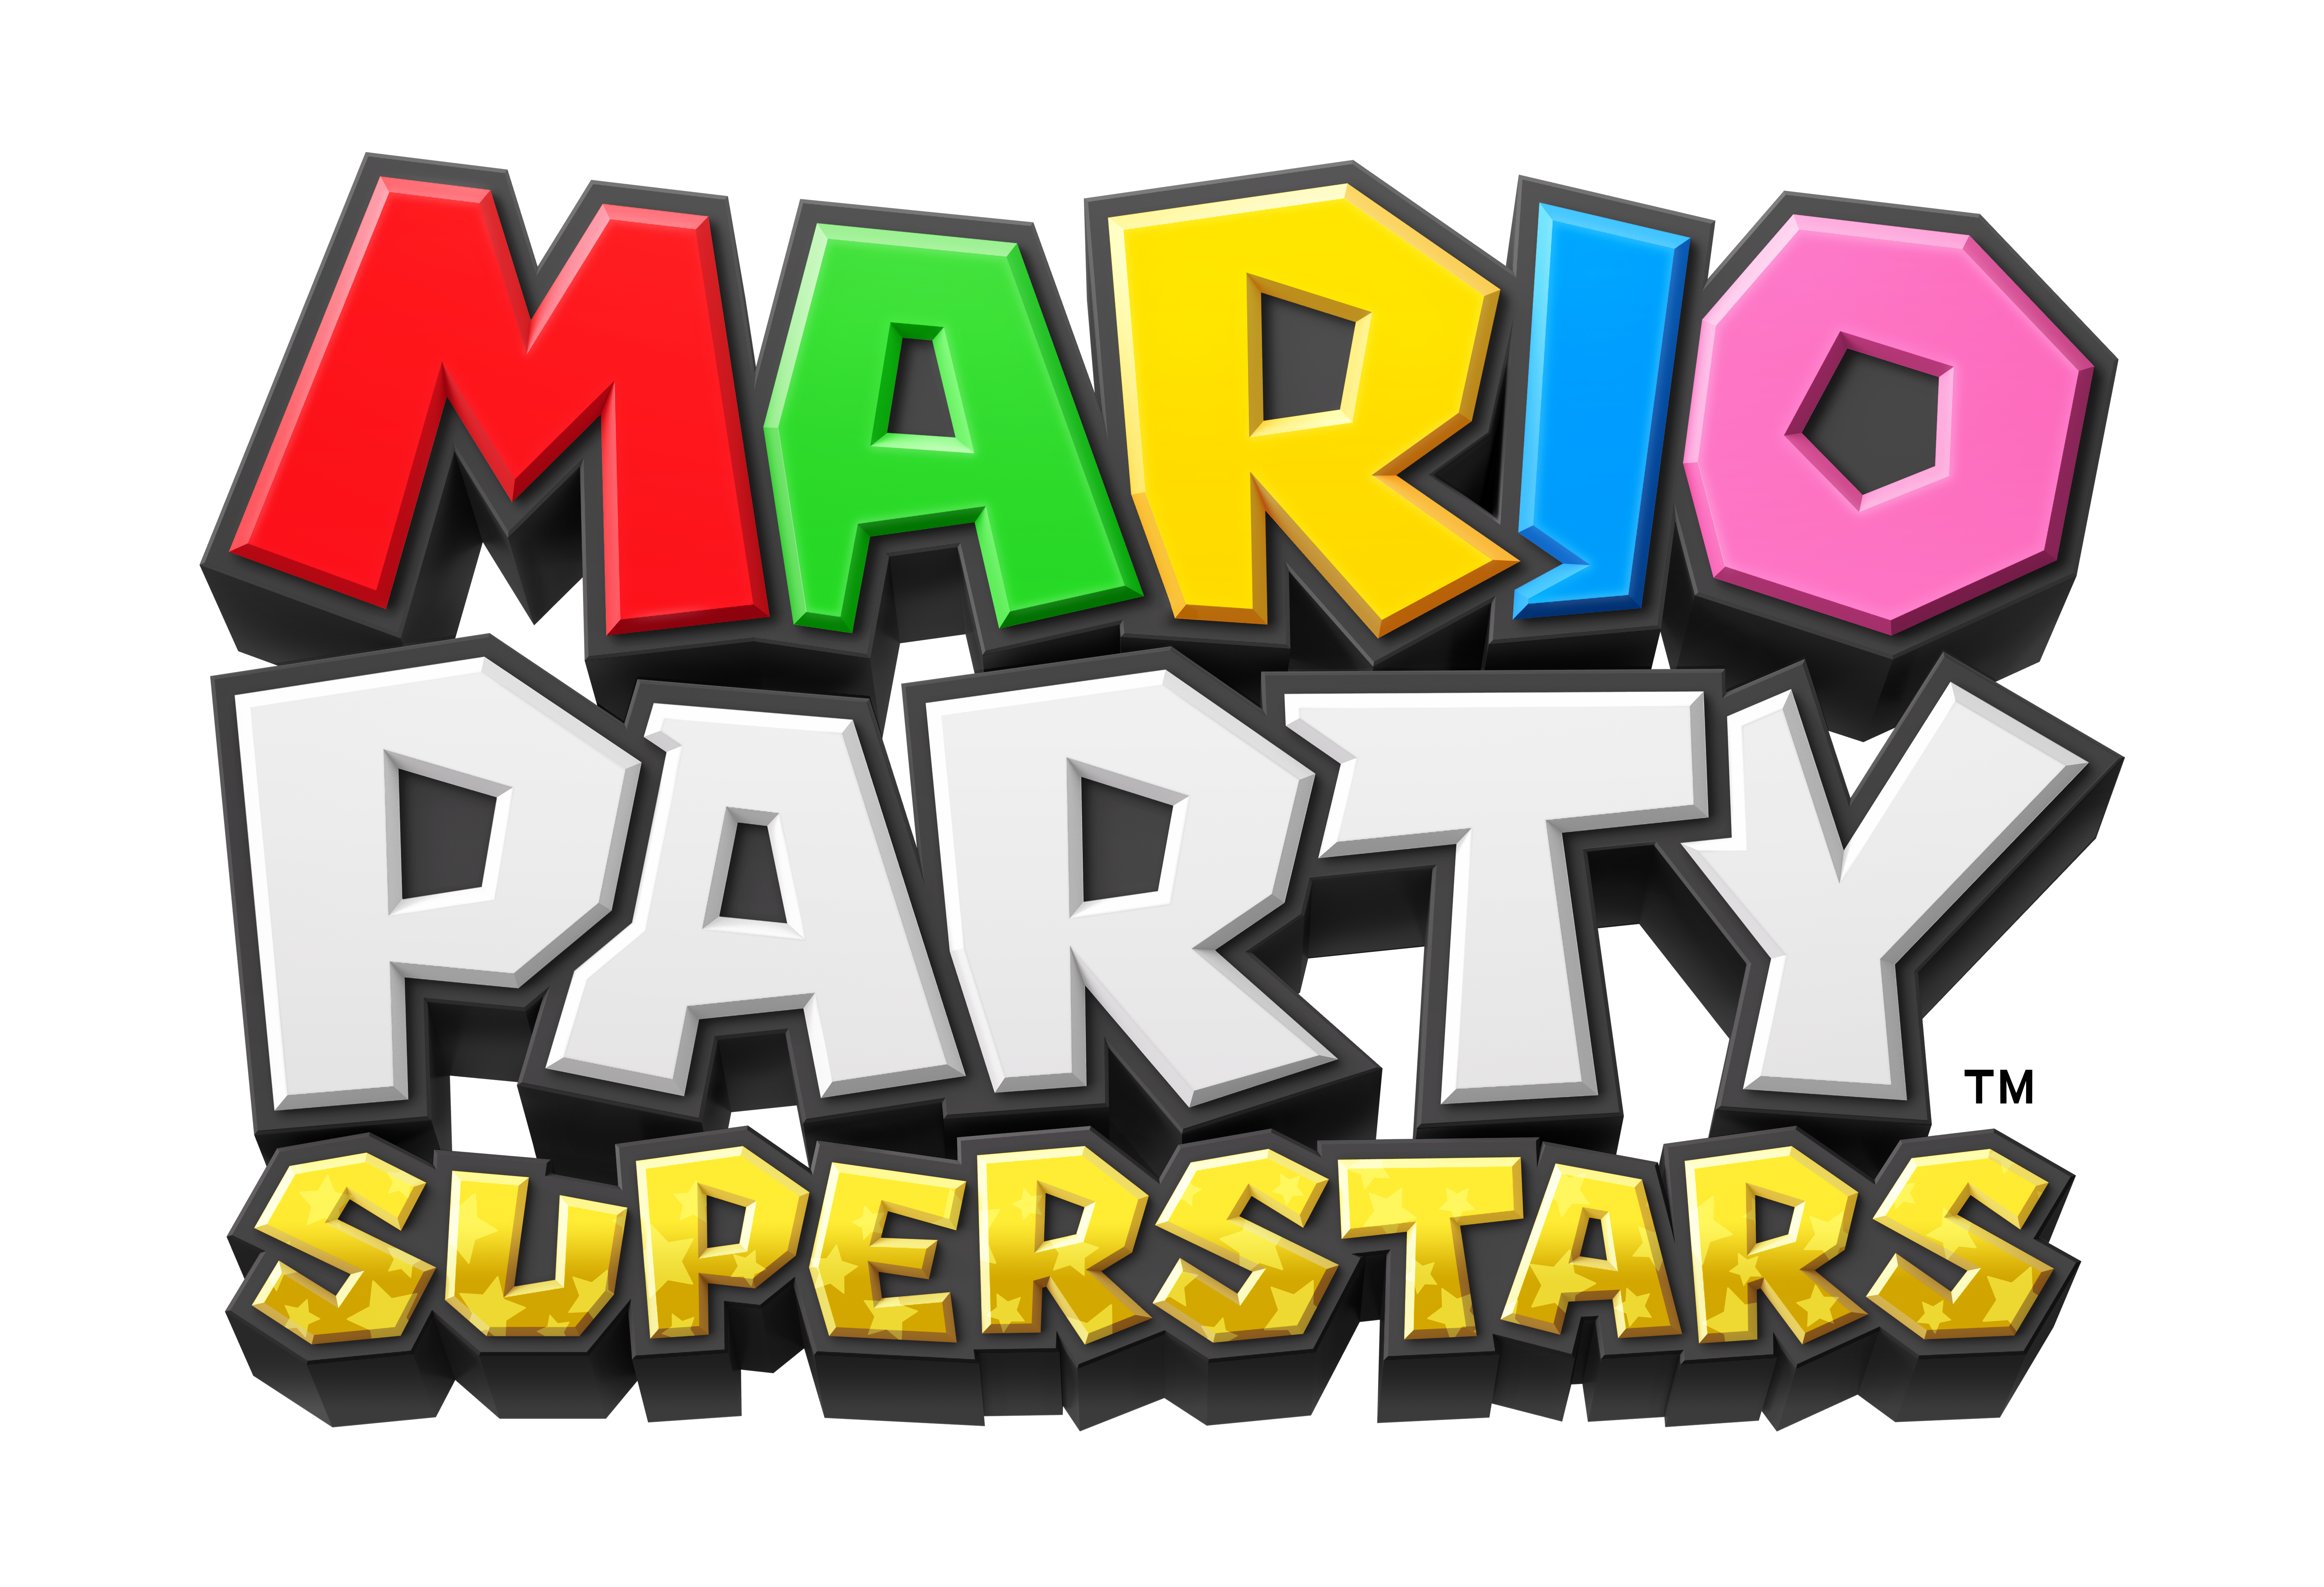 Mario Party Superstars logo